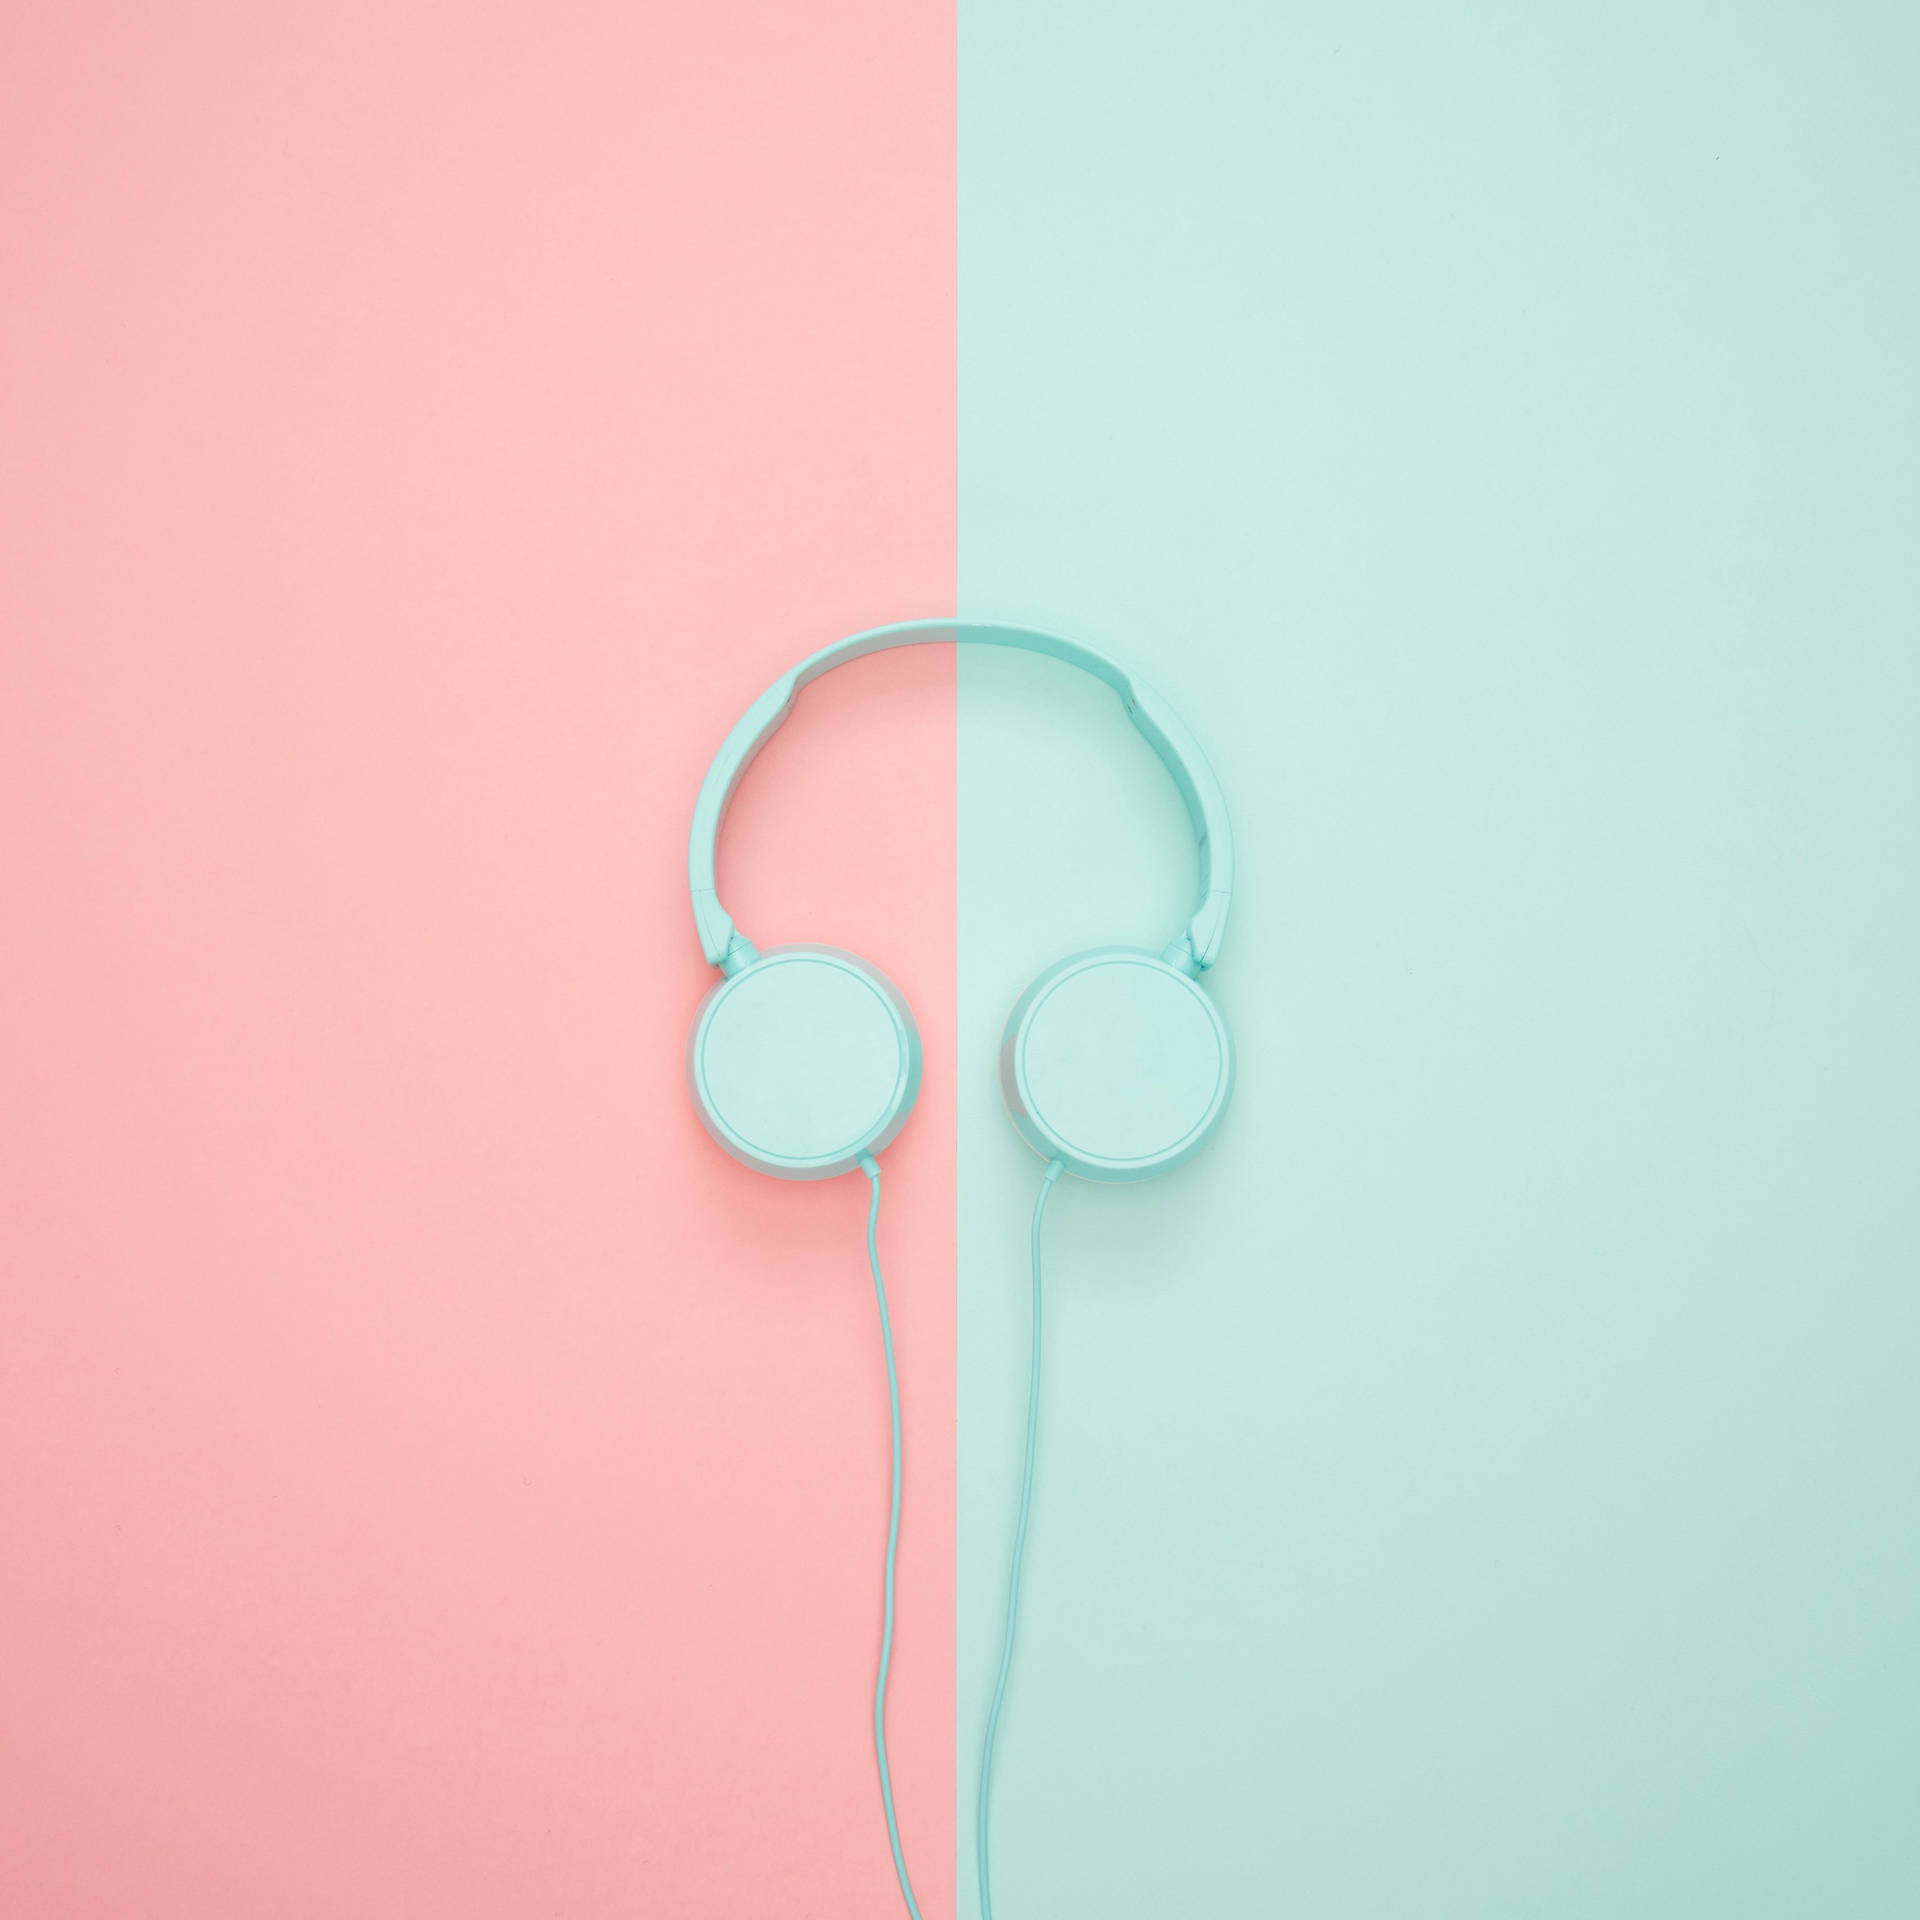 Ipad Pro 12.9 Pastel Turquoise Headphones Background